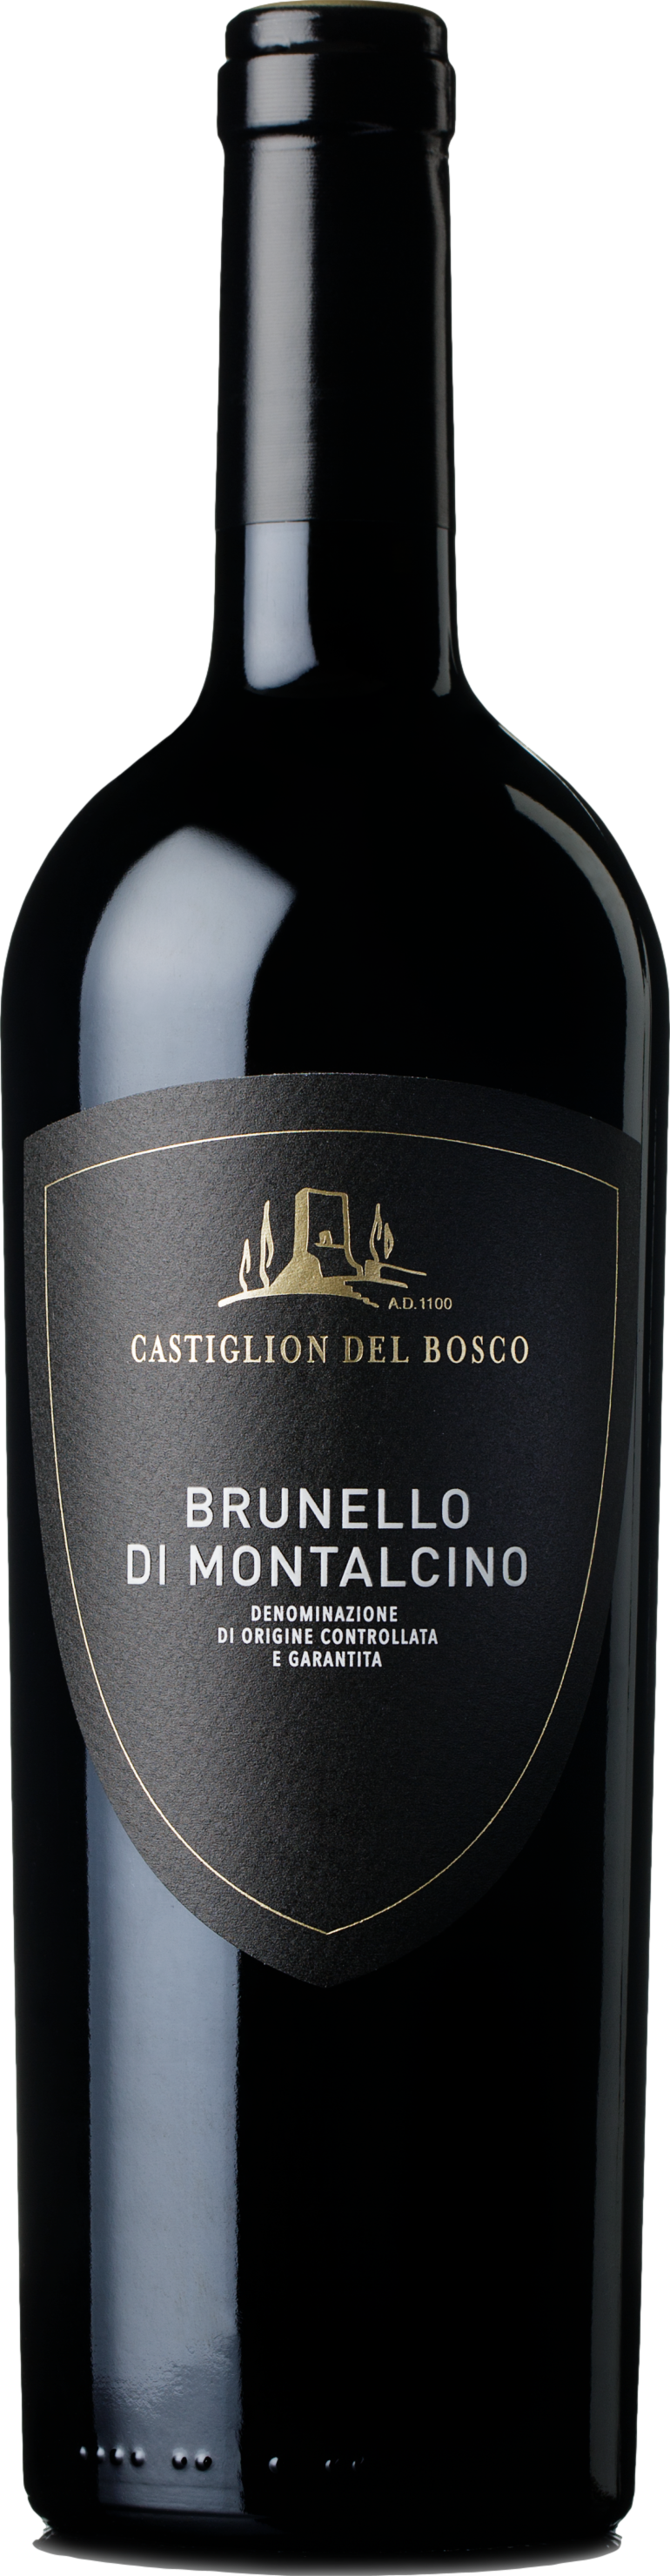 05/2017 günstig Kaufen-Castiglion del Bosco Brunello di Montalcino 2017. Castiglion del Bosco Brunello di Montalcino 2017 . 